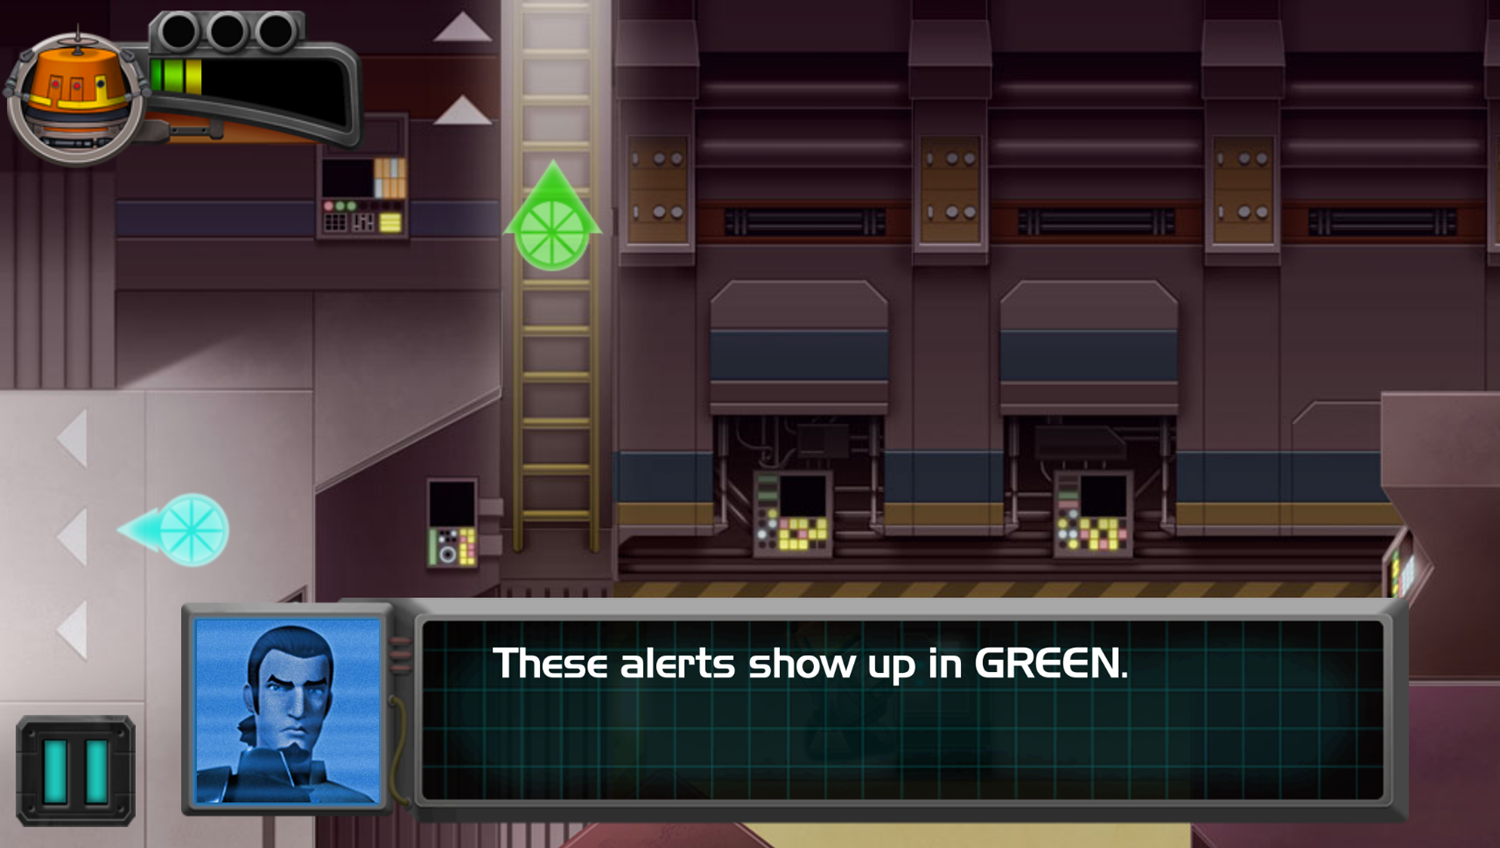 Star Wars Rebels Chopper Chase Game Green Tips Instructions Screenshot.